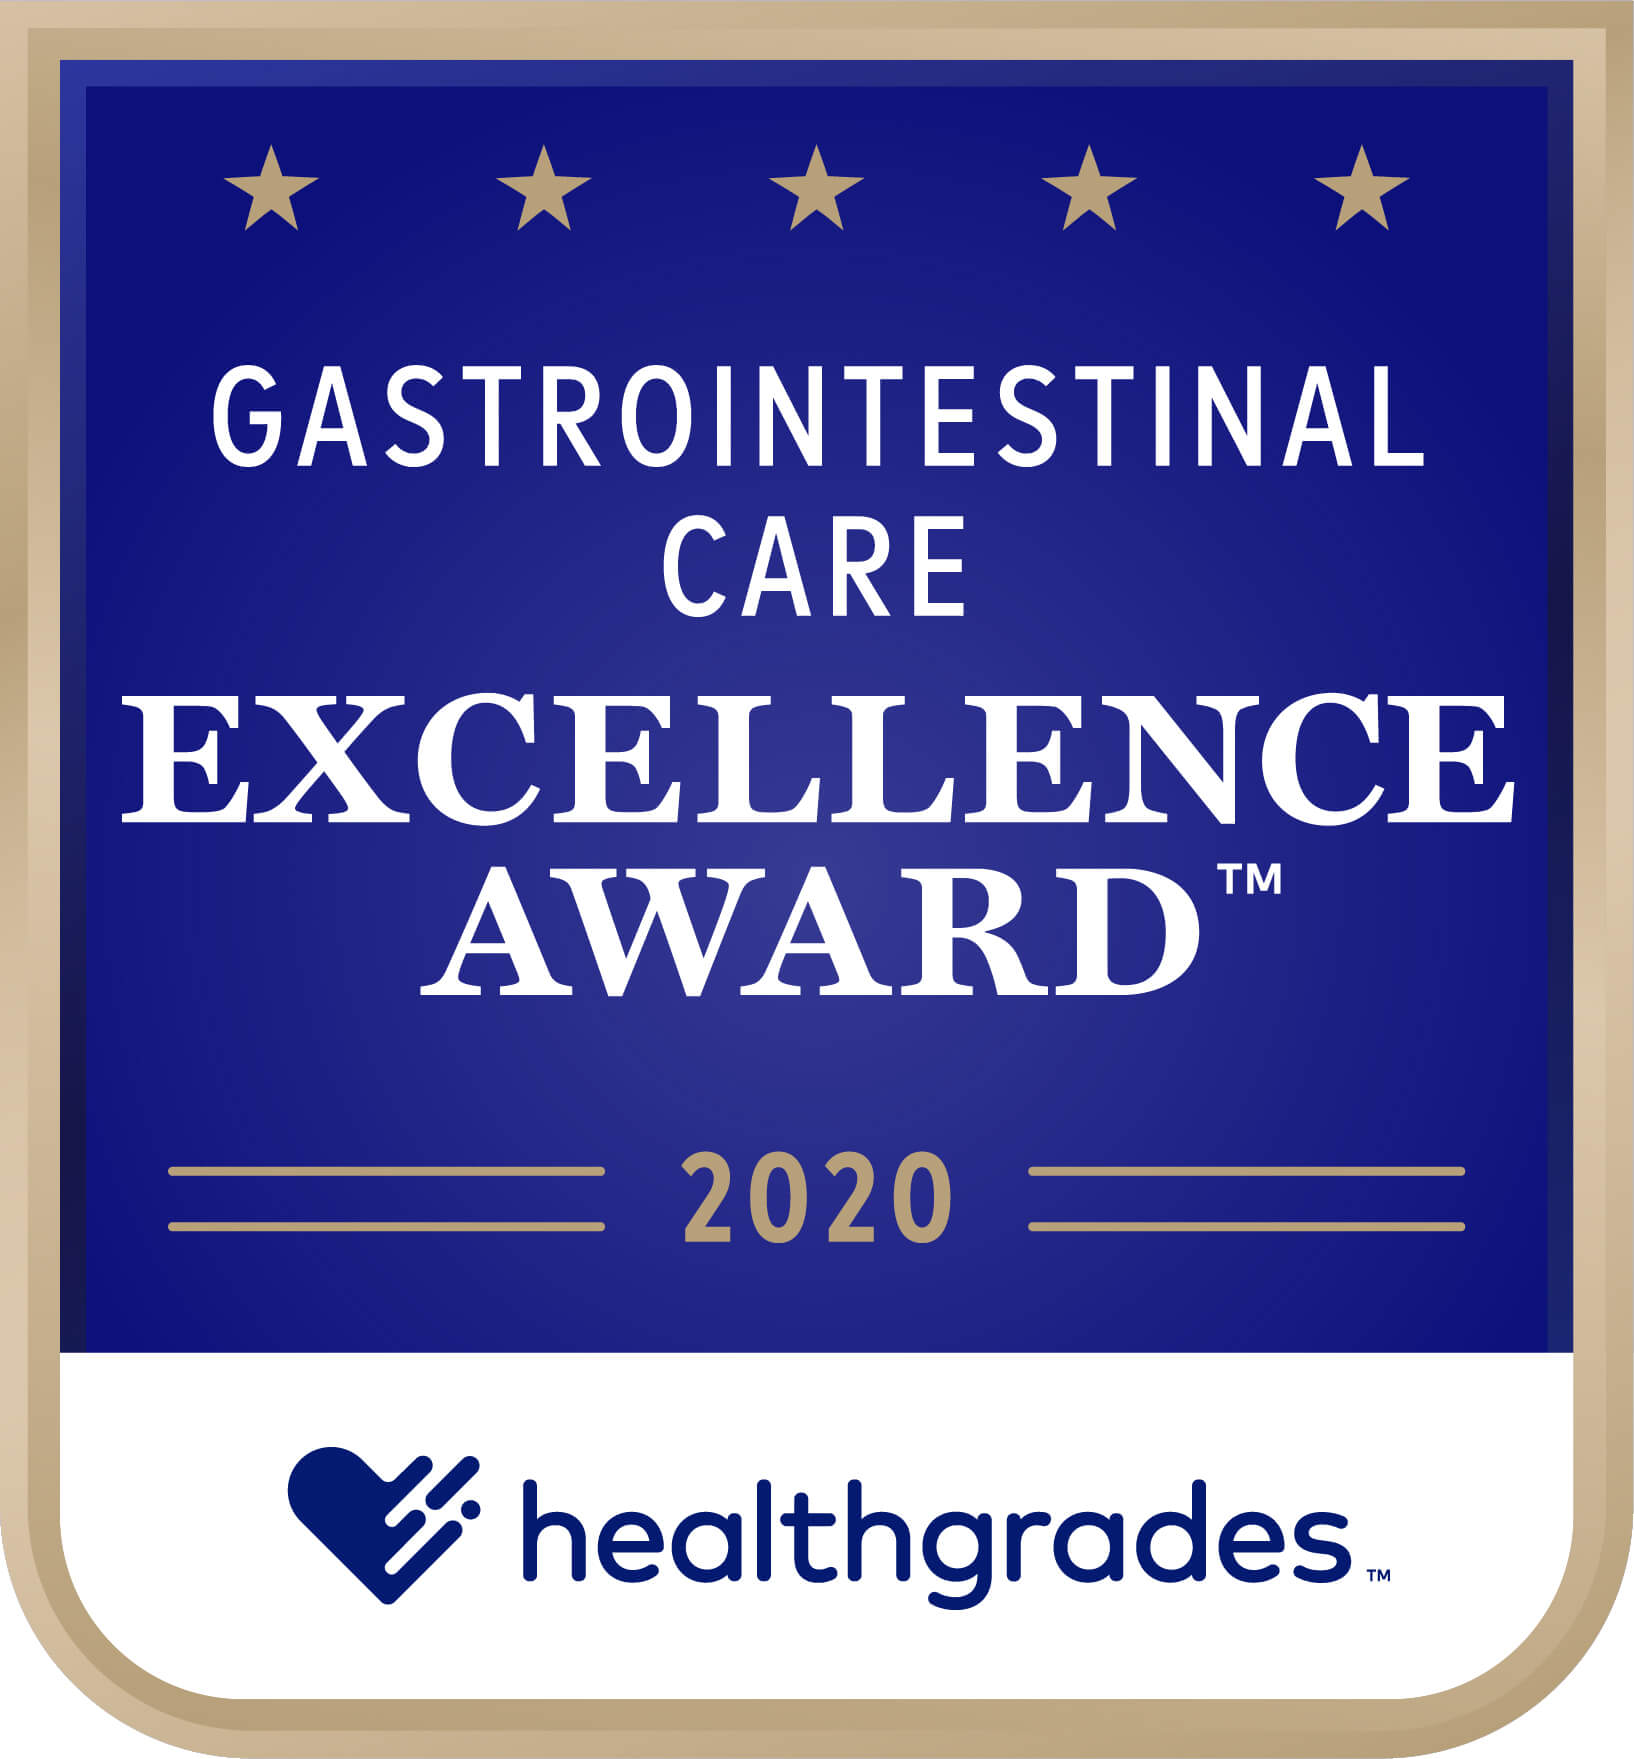 Healthgrades Excellence Award for Gastrointestinal Care 2020